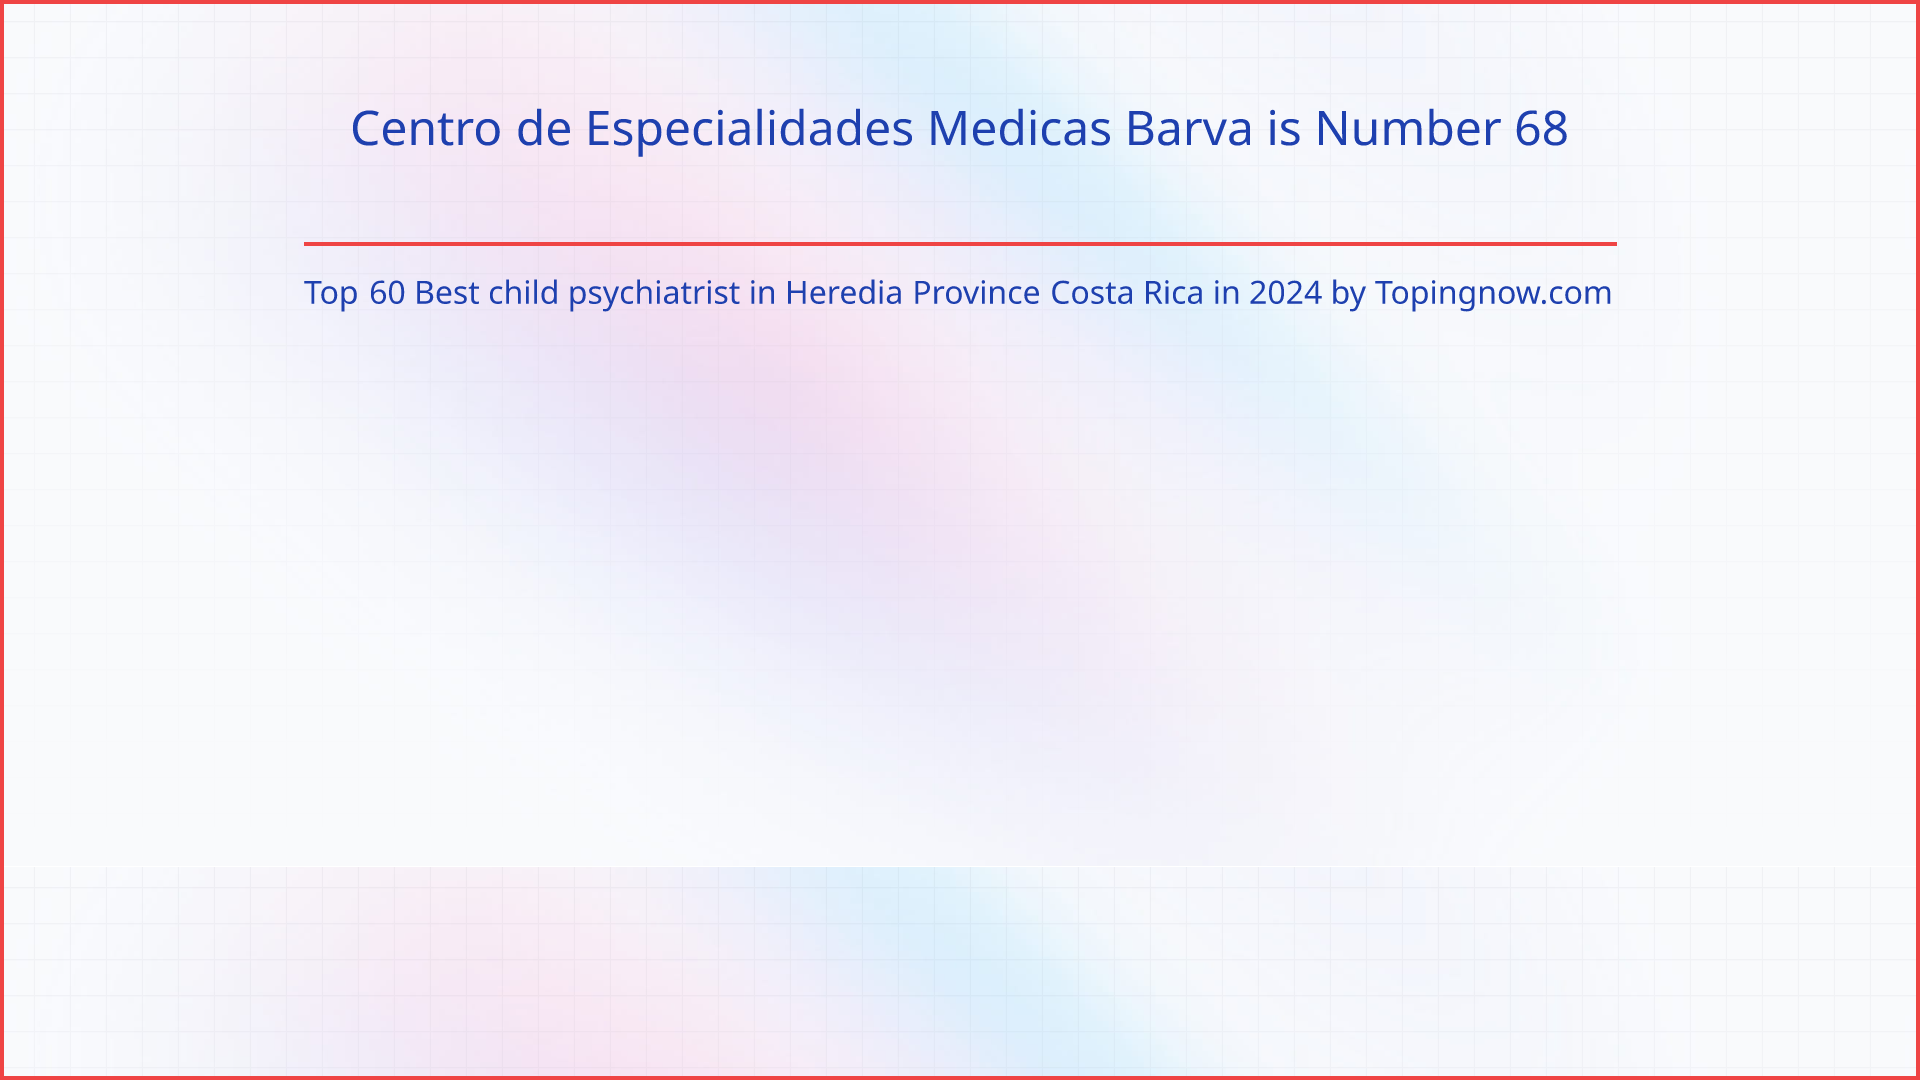 Centro de Especialidades Medicas Barva: Top 60 Best child psychiatrist in Heredia Province Costa Rica in 2024